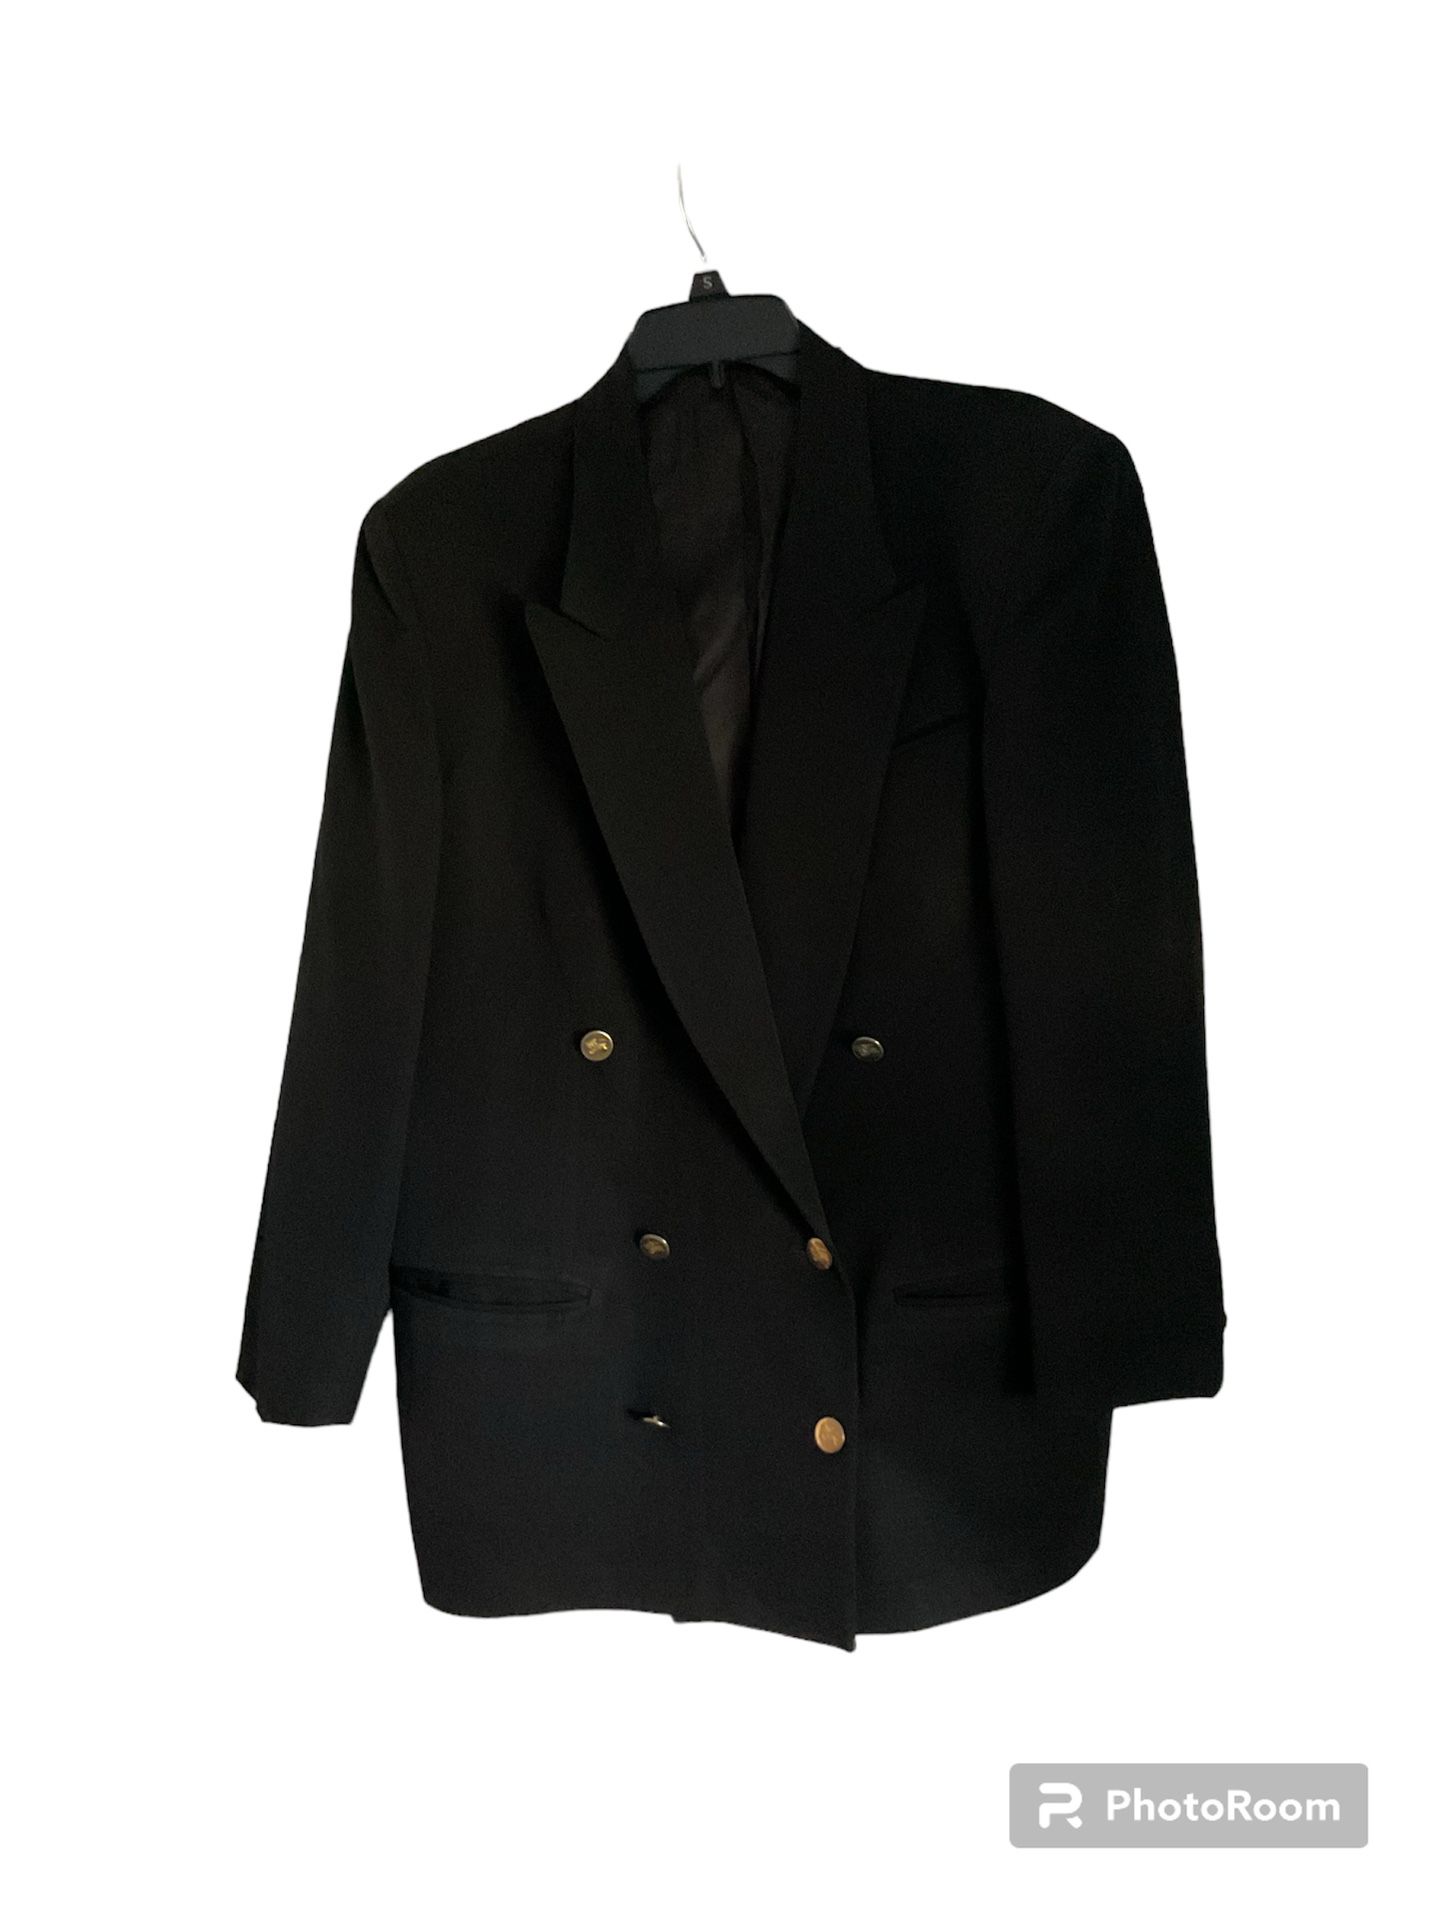 Vintage Burberry Black Double Breasted Wool Blazer Dress Suit Jacket, women’s sz 14